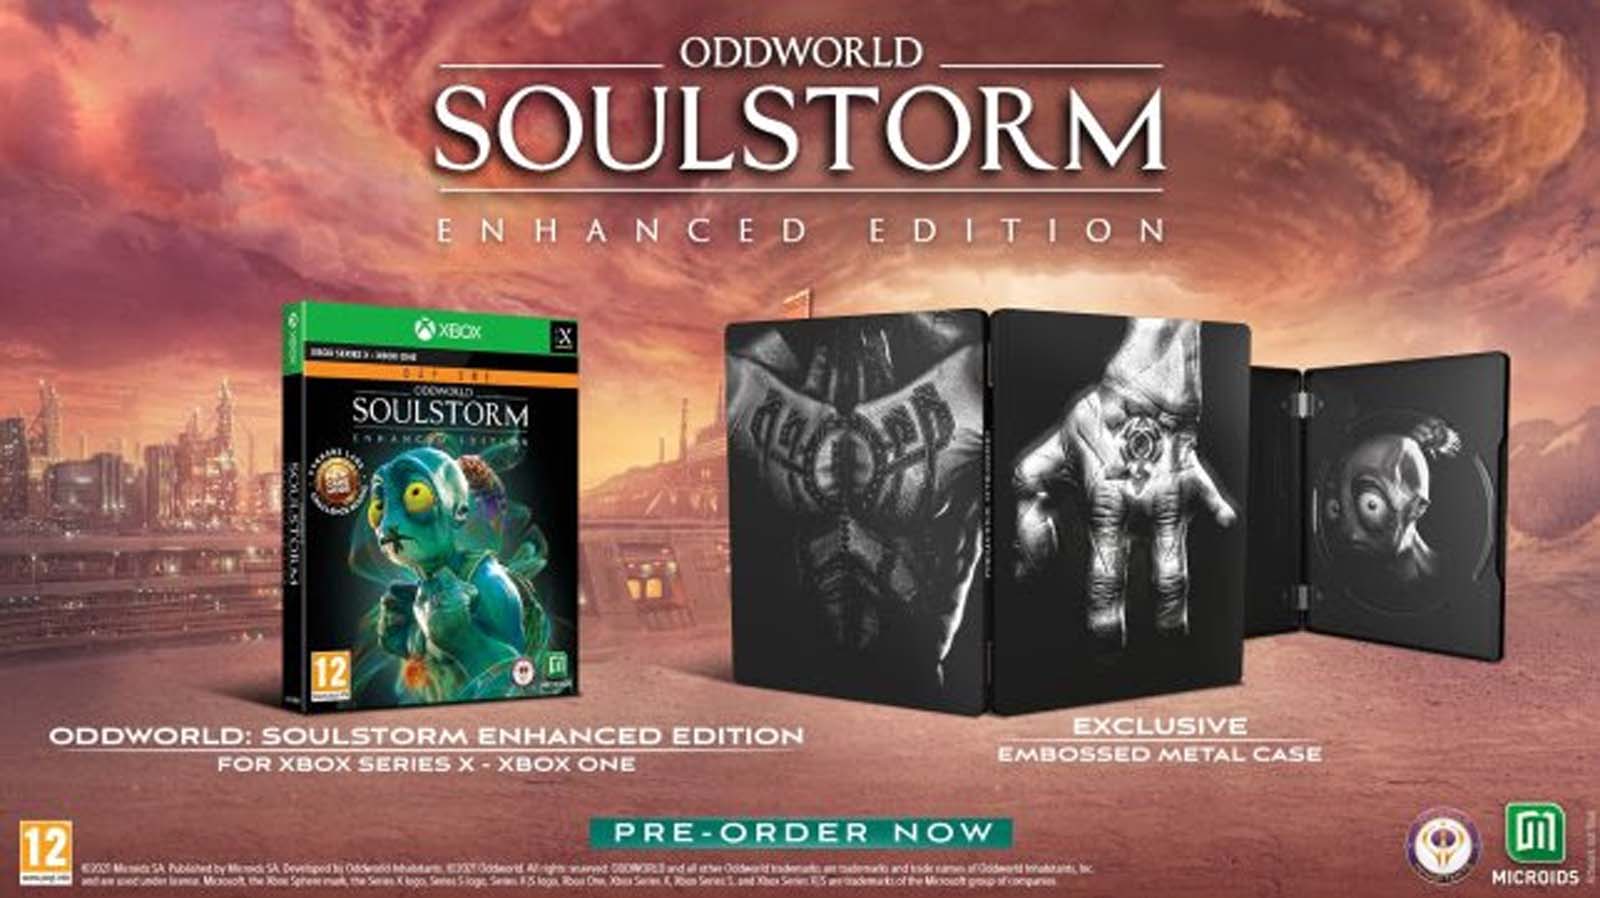 Oddworld Soulstorm Enhanced Edition Coming November 30